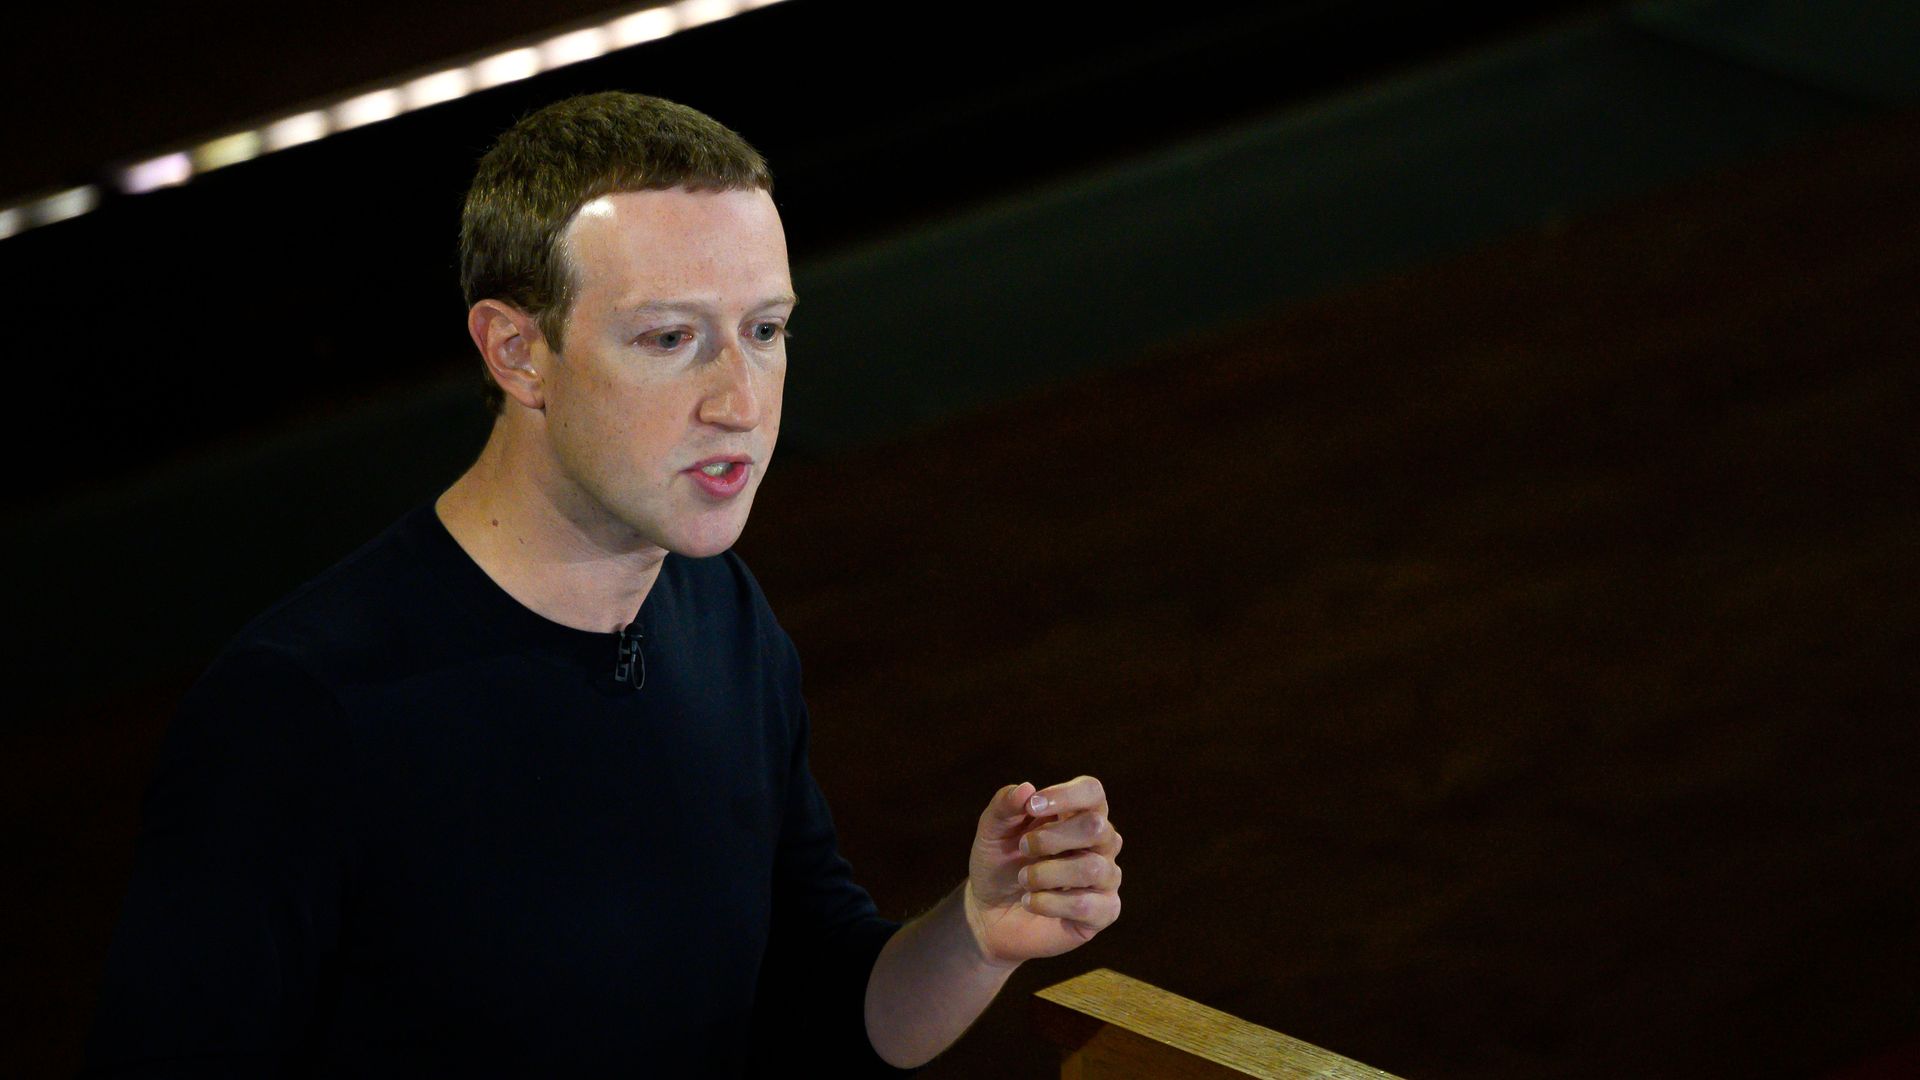 Mark Zuckerberg doubles down on free speech - Axios